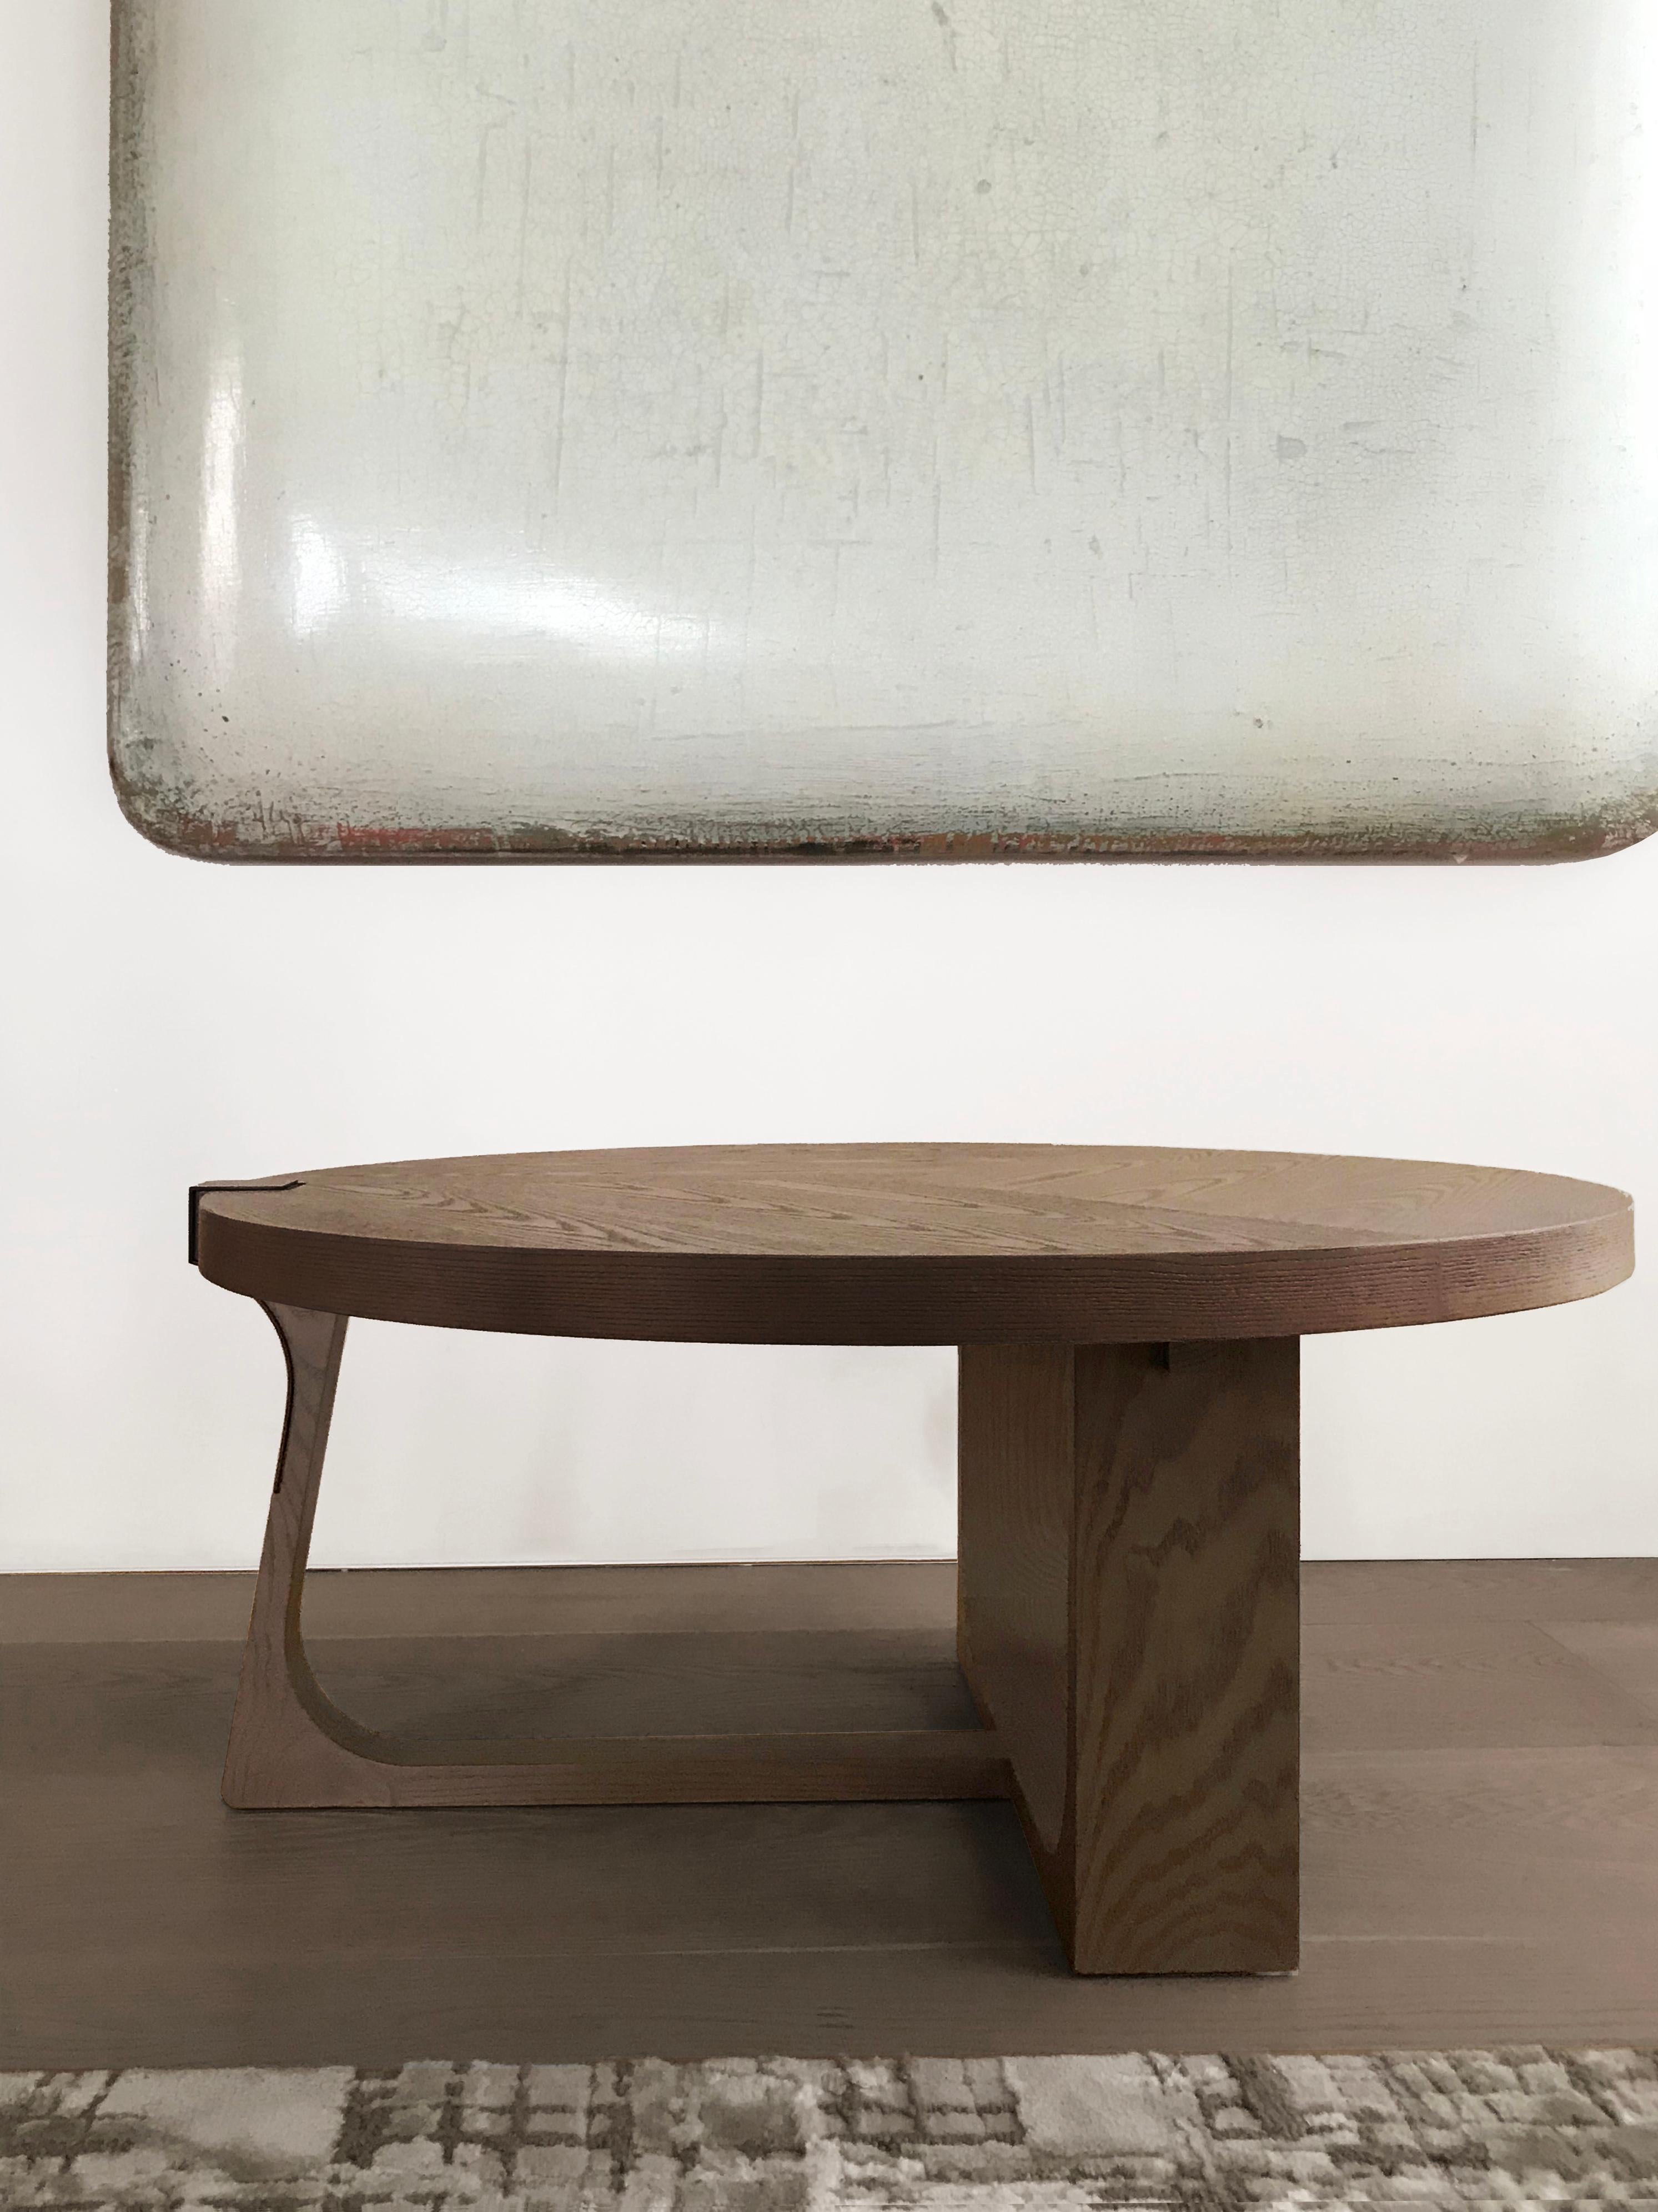 Description: Low coffee table
Color: Grey
Size: 90 Ø x 40 H cm
Material: Oak and bronze
Collection: Interlock.